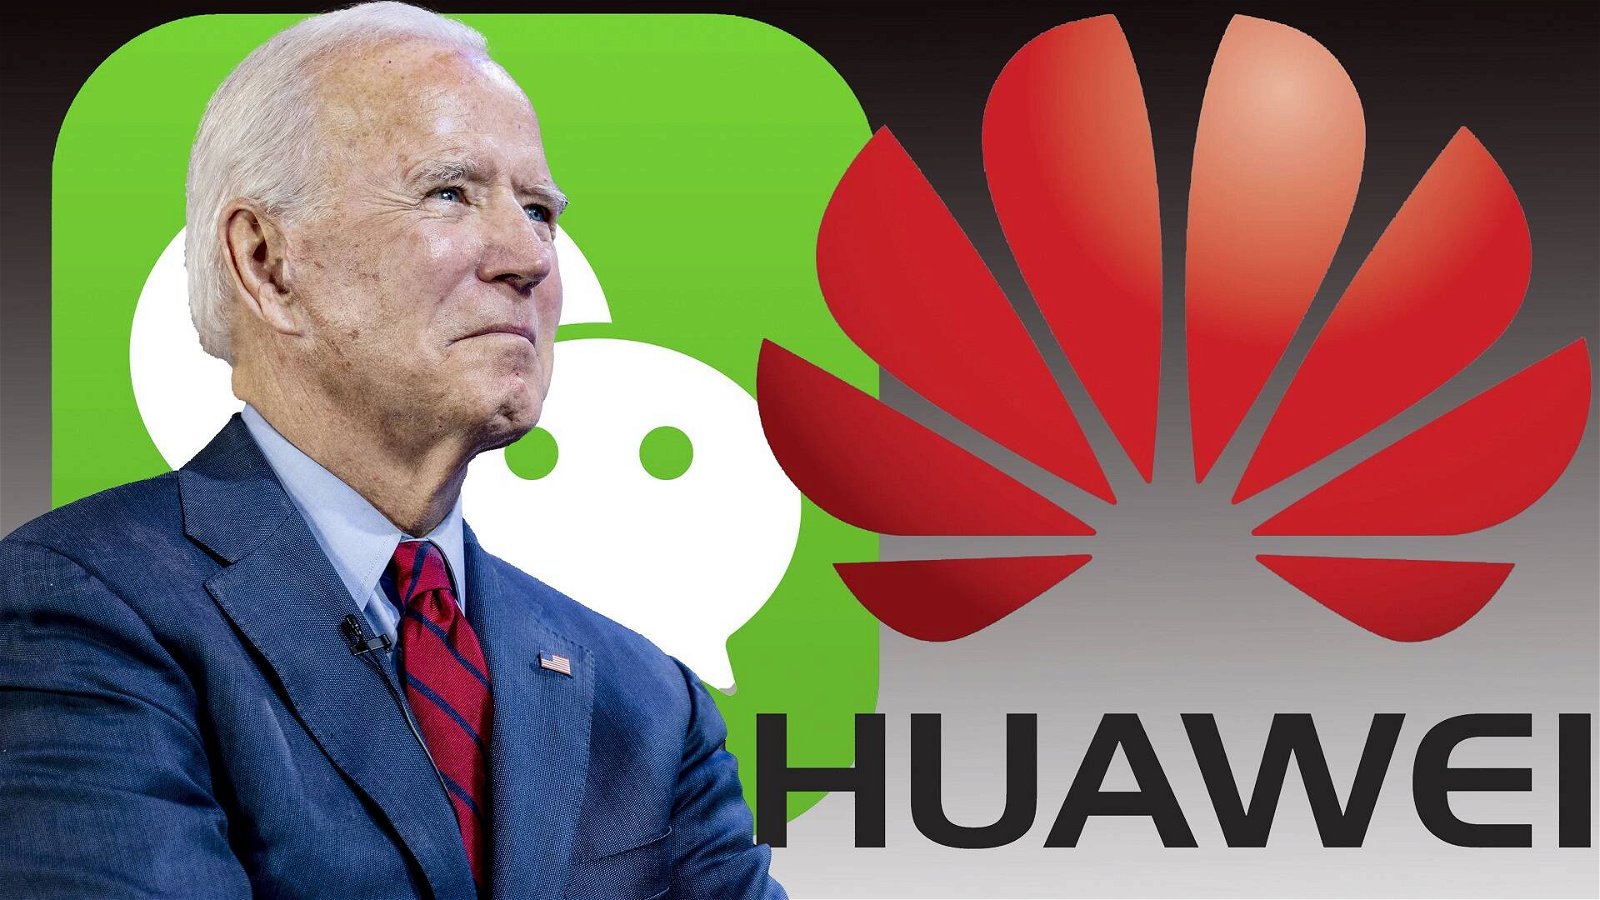 Immagine di Huawei: con Biden tornano i Servizi Google?